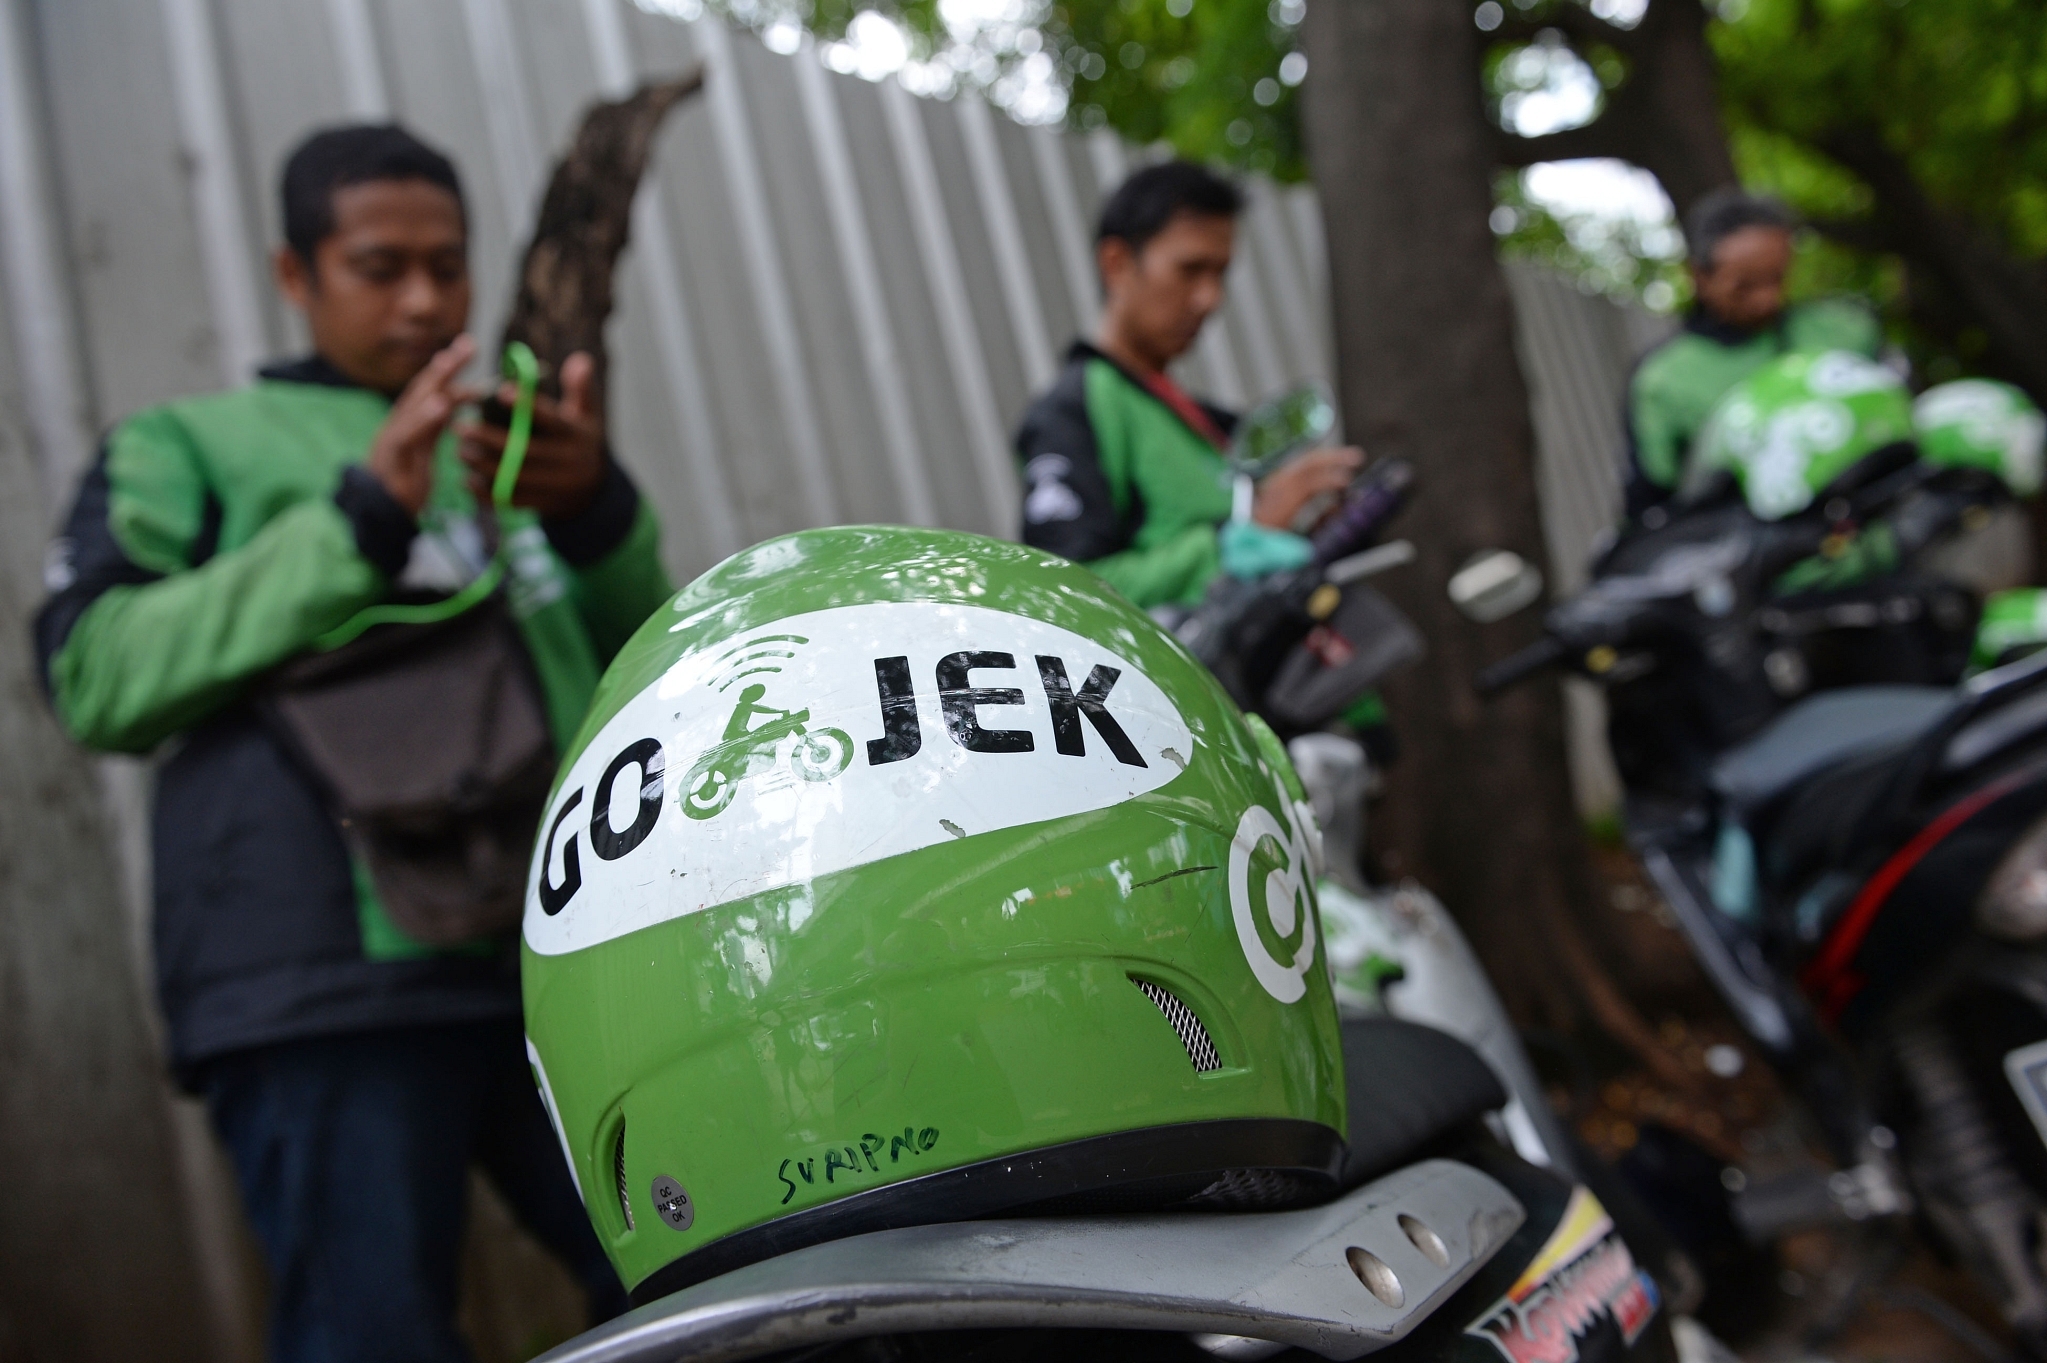 Go-Jek Bike Taxis in Indonesia (Dimas Ardian/Bloomberg via Getty Images)